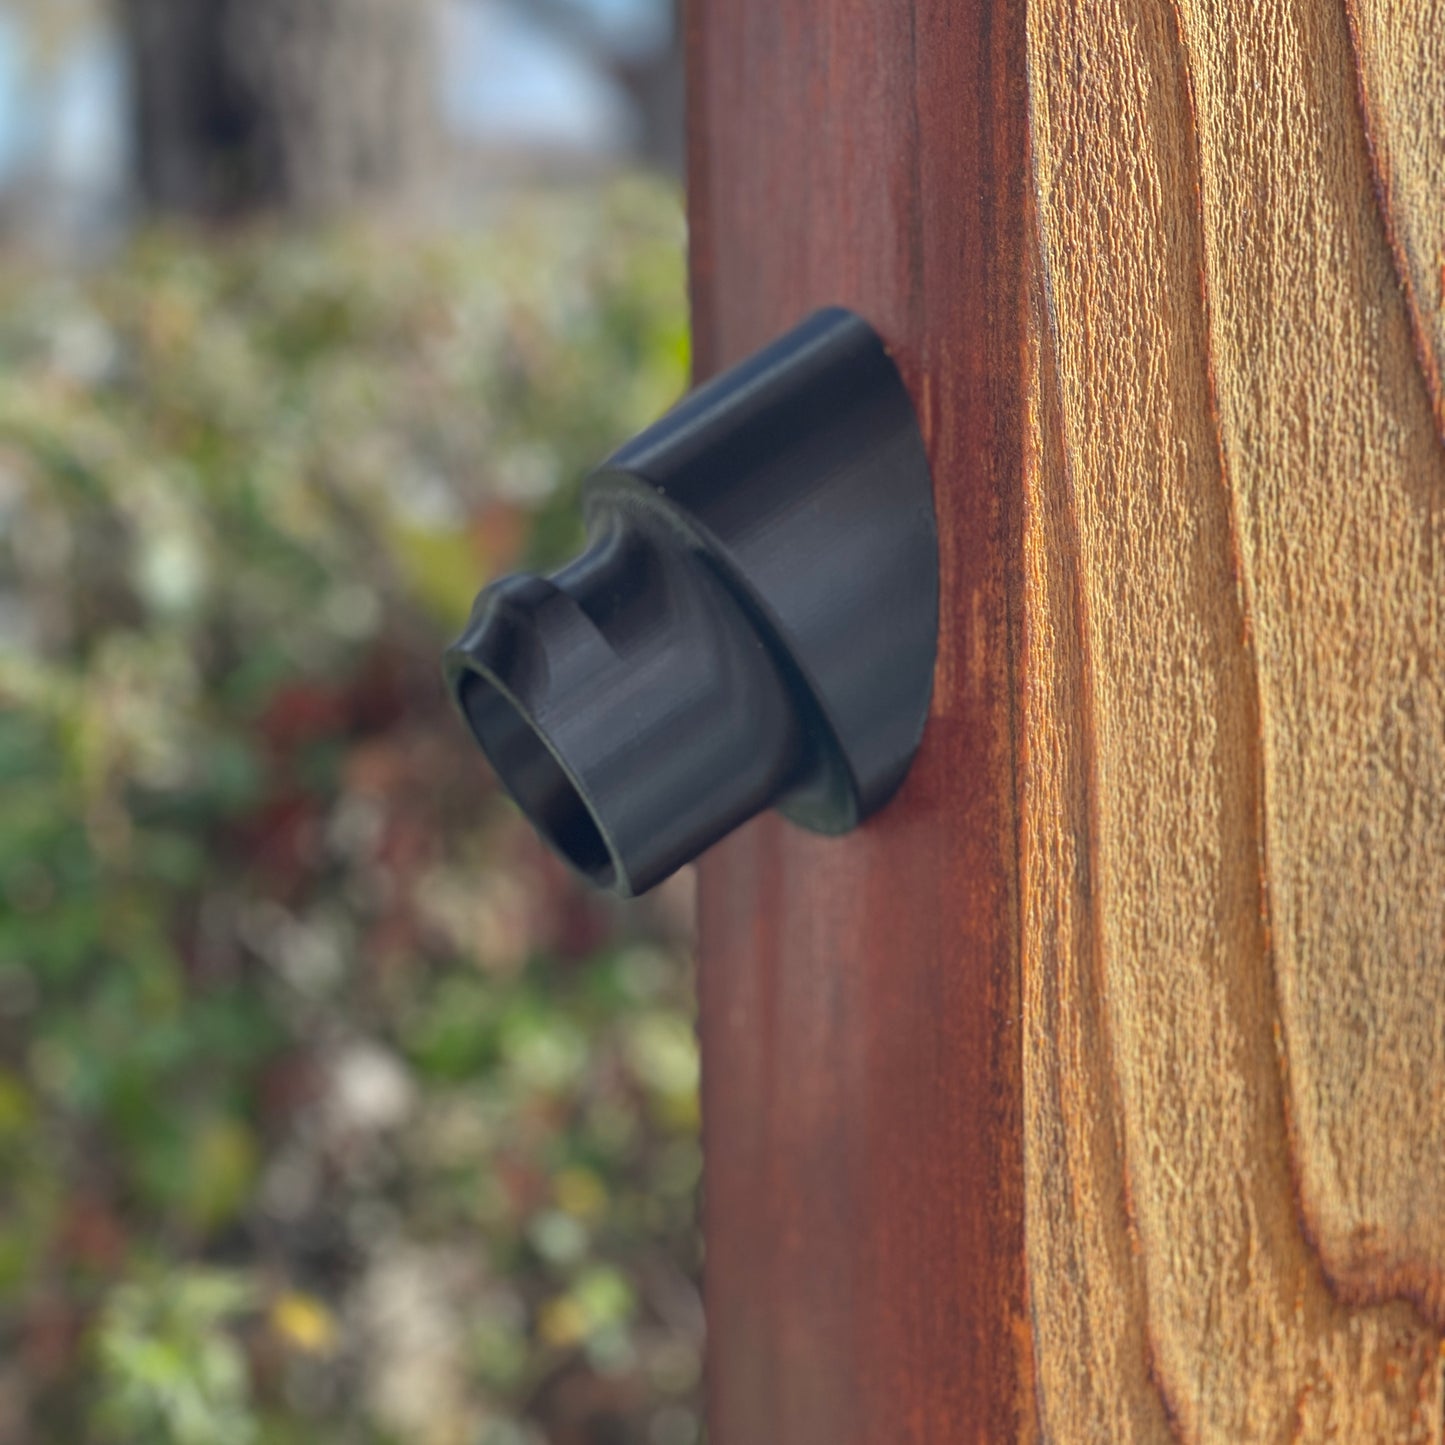 EV Charging Plug Holder / Dock / Hanger for J1772 plugs - Simple and Minimal Accessory